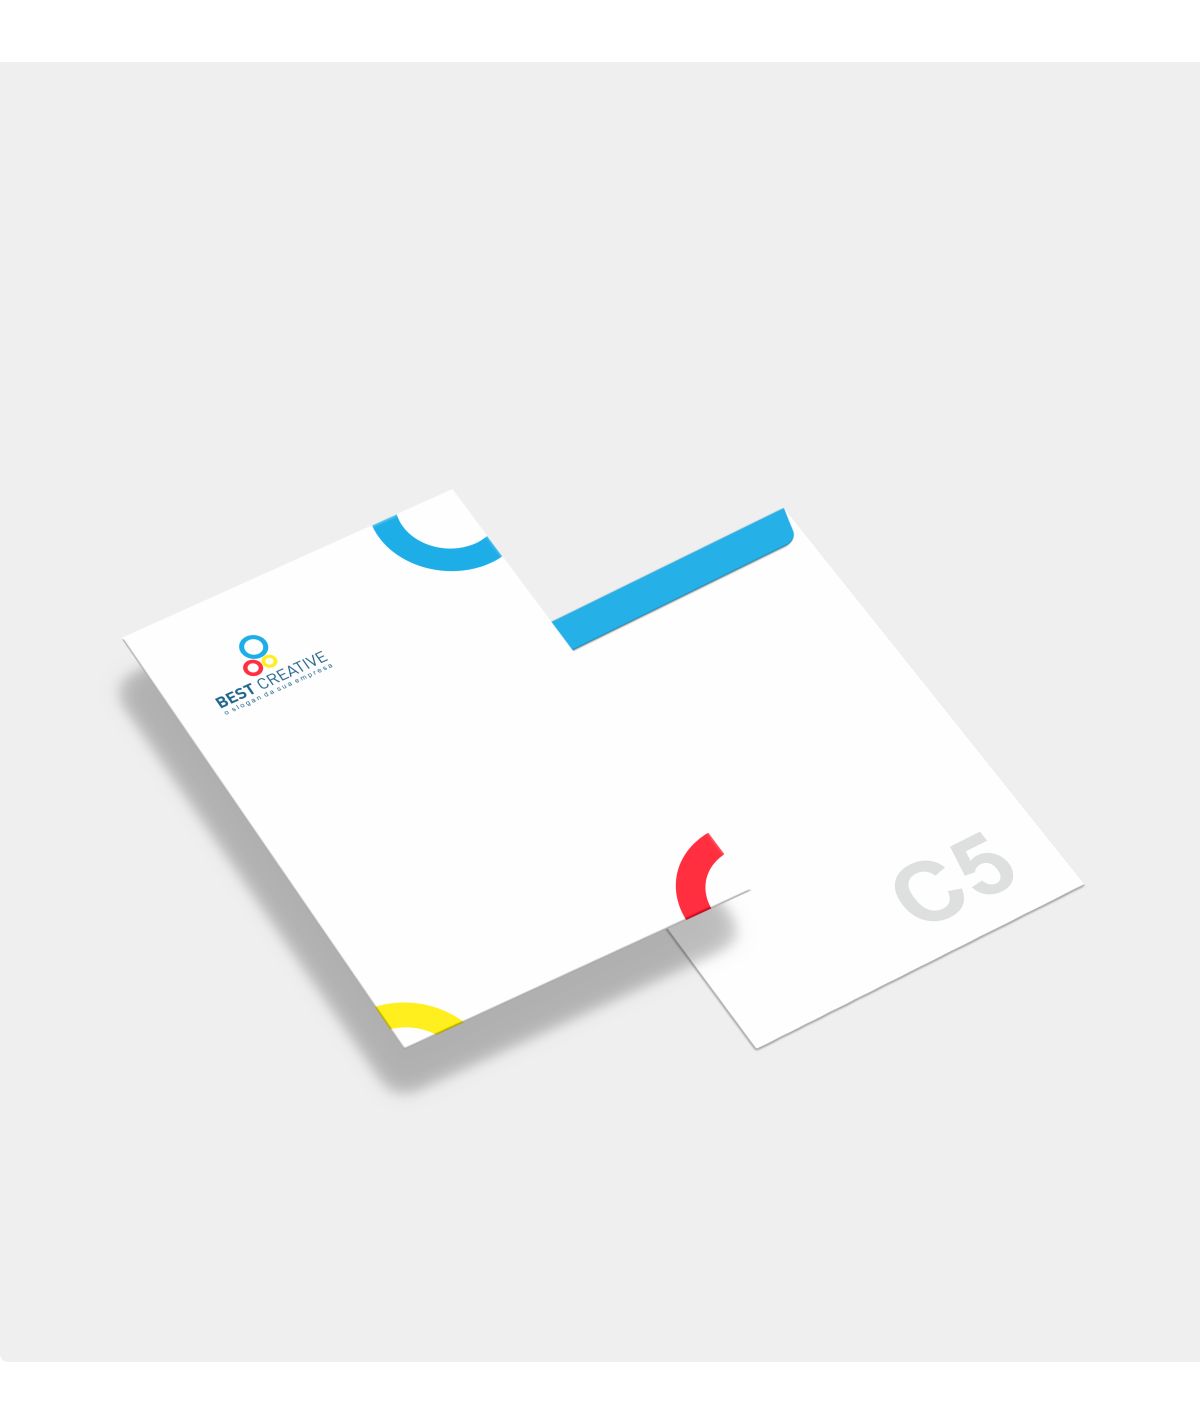 Envelope C5